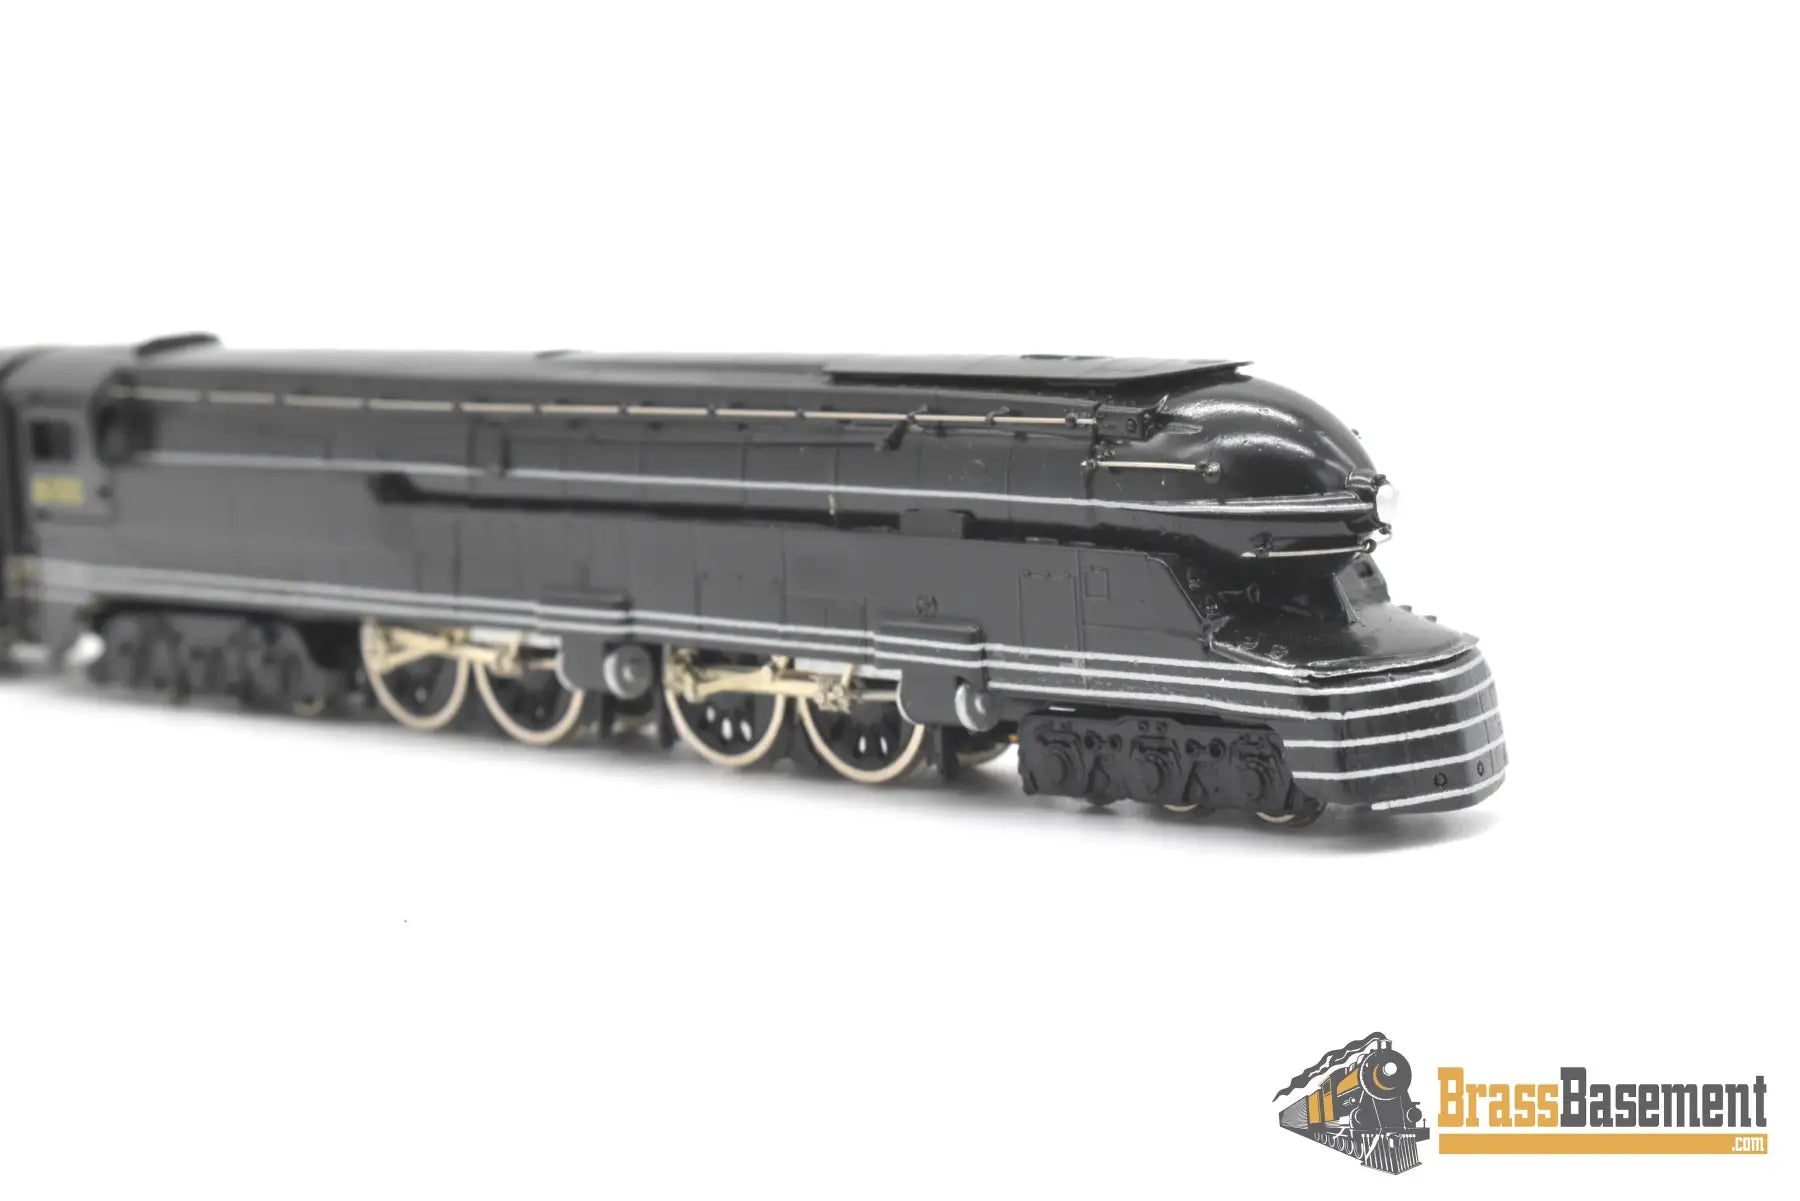 N Brass - Pennsylvania Rr S - 1 6 - 4 - 4 - 6 #6100 Oriental Limited Samhongsa Fp Steam